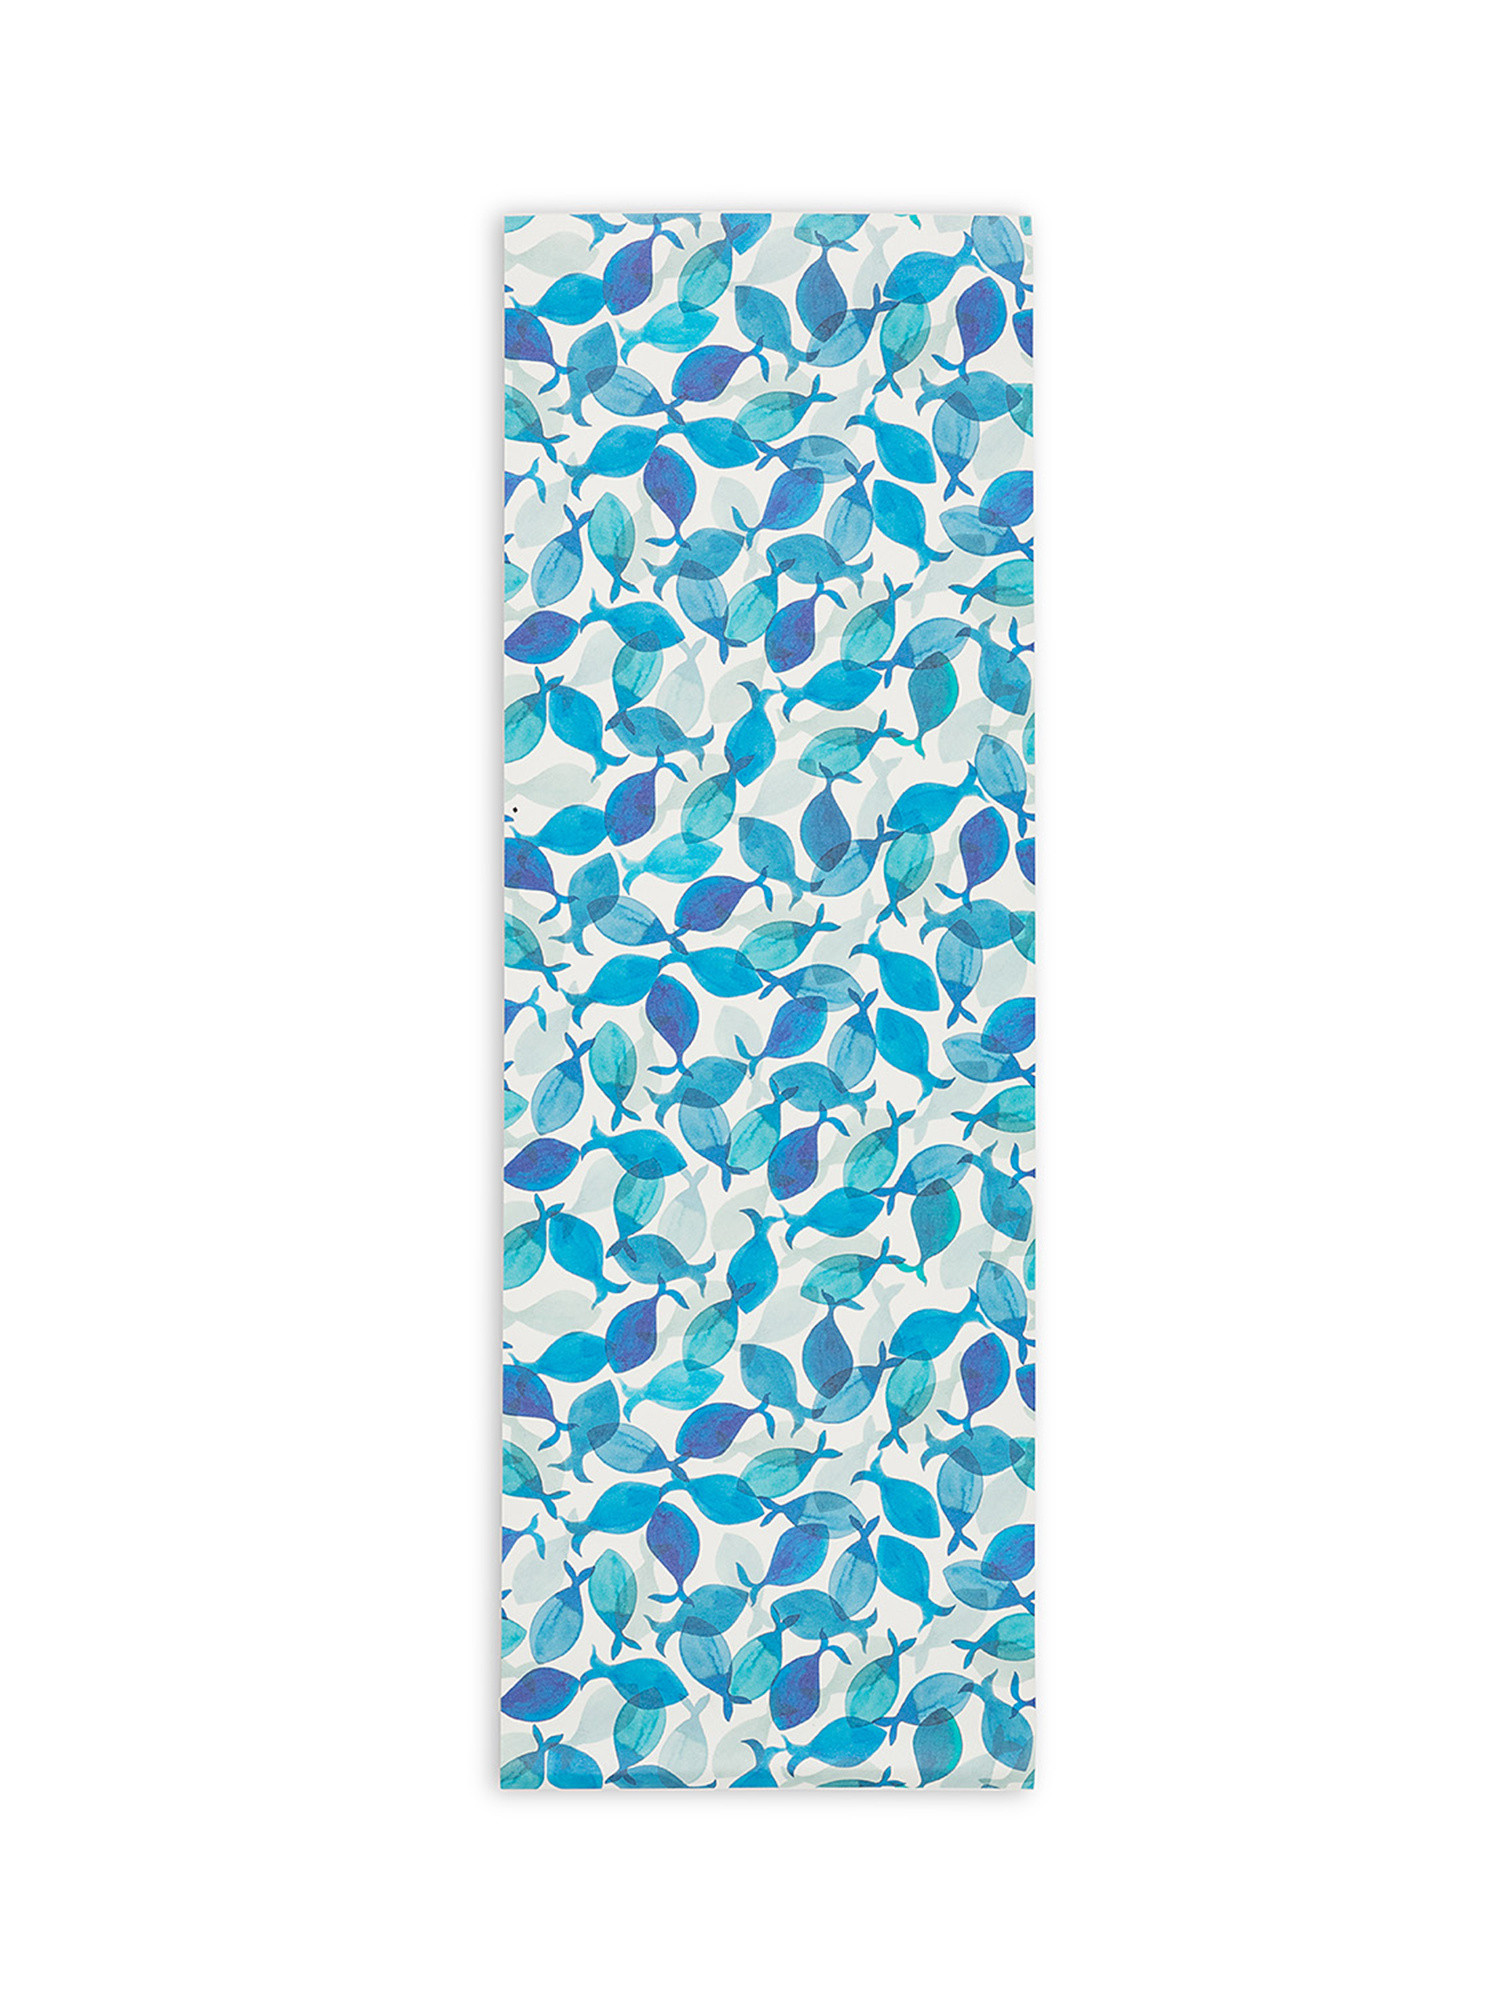 Tappeto da cucina PVC stampa pesci, Blu, large image number 0